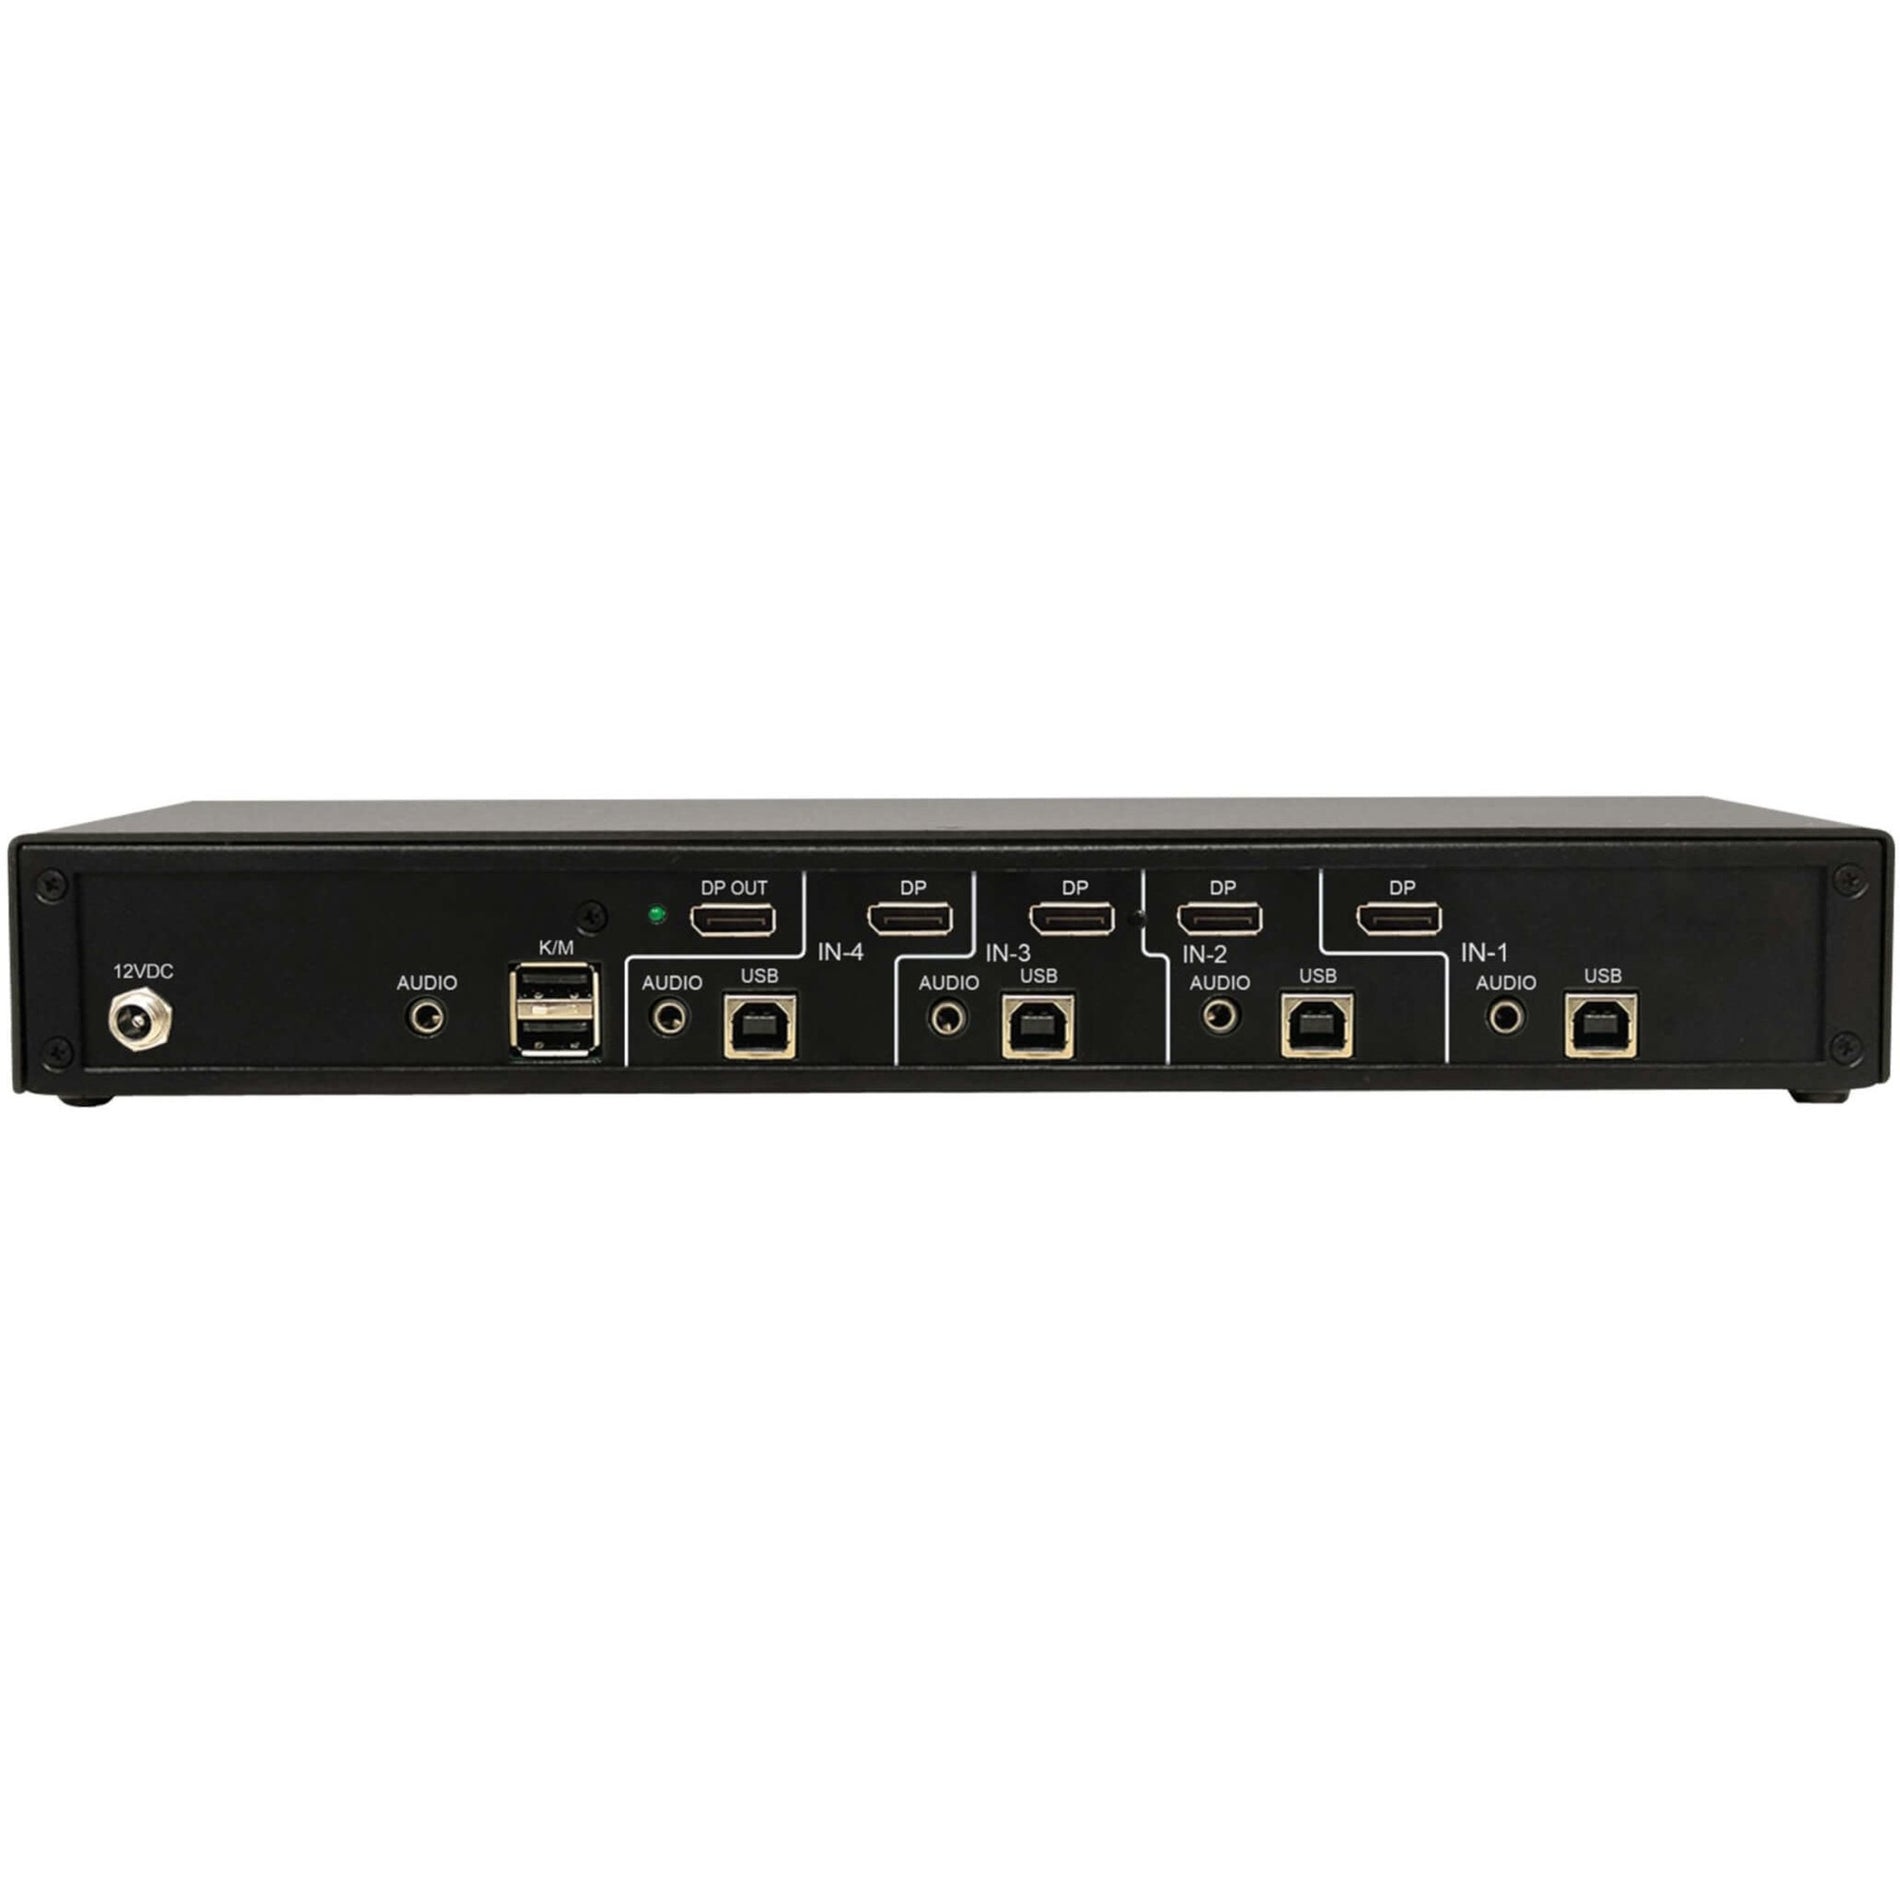 Tripp Lite B002-DP1A4-N4 4-Port NIAP PP4.0-Certified DisplayPort KVM Switch, 3840 x 2160 Resolution, 3 Year Warranty